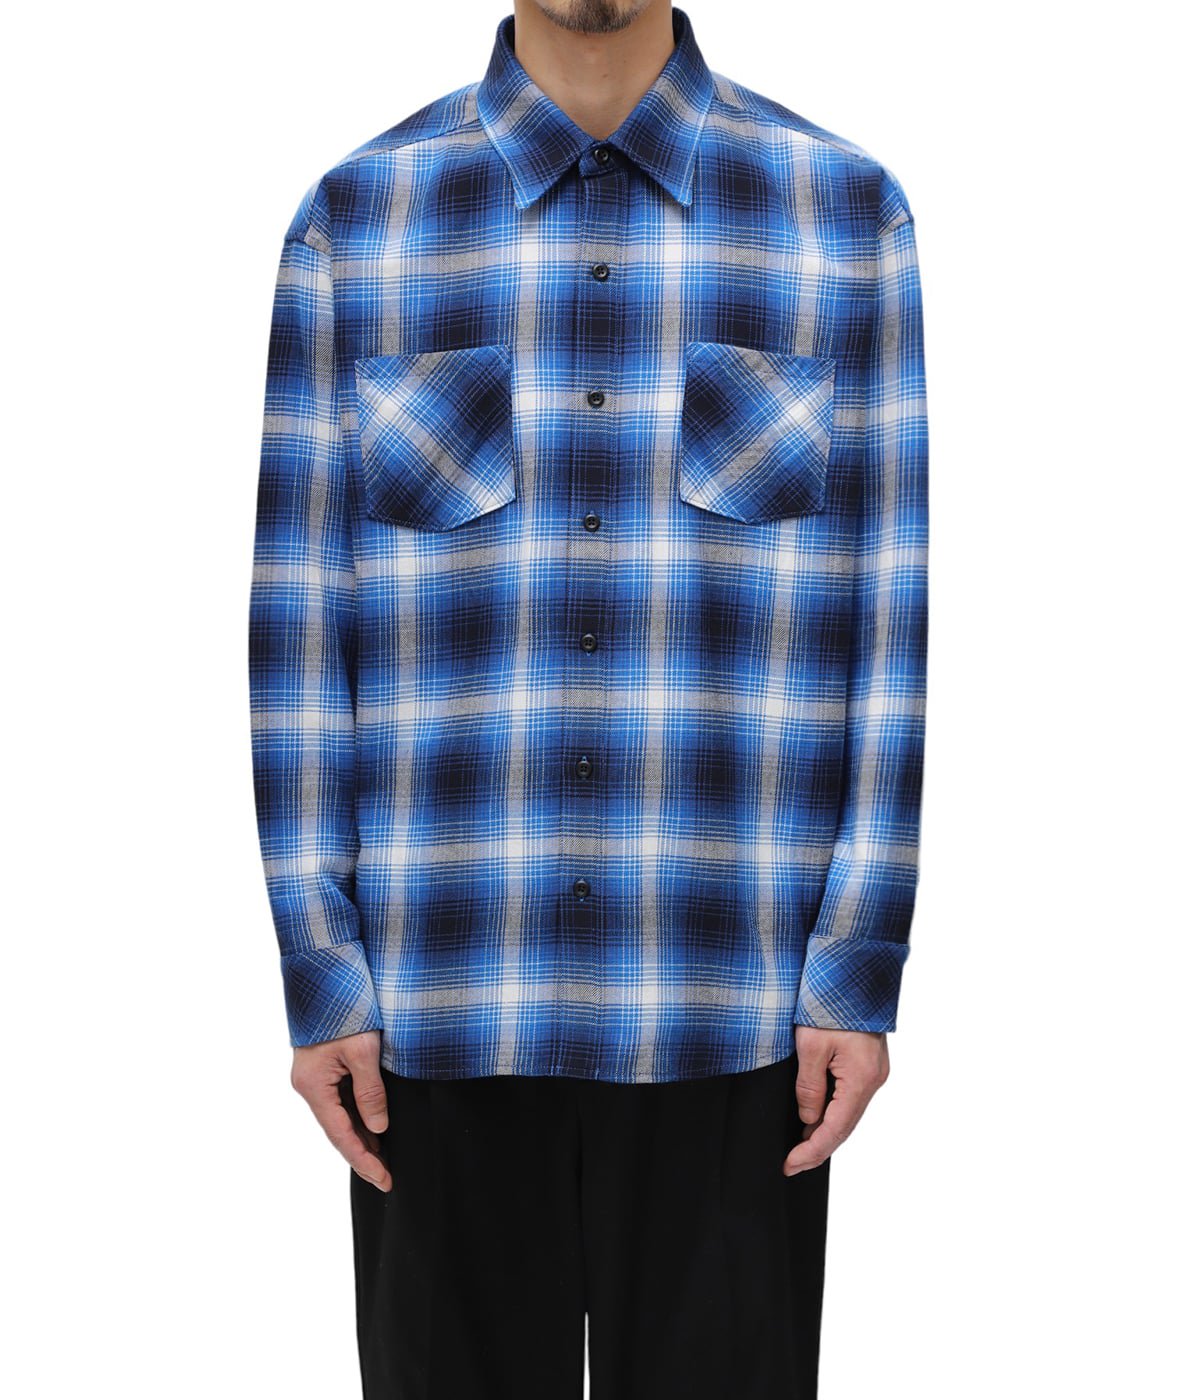 Standerd shirt | Rafu(ラフ) / トップス 長袖シャツ (メンズ)の通販 ...